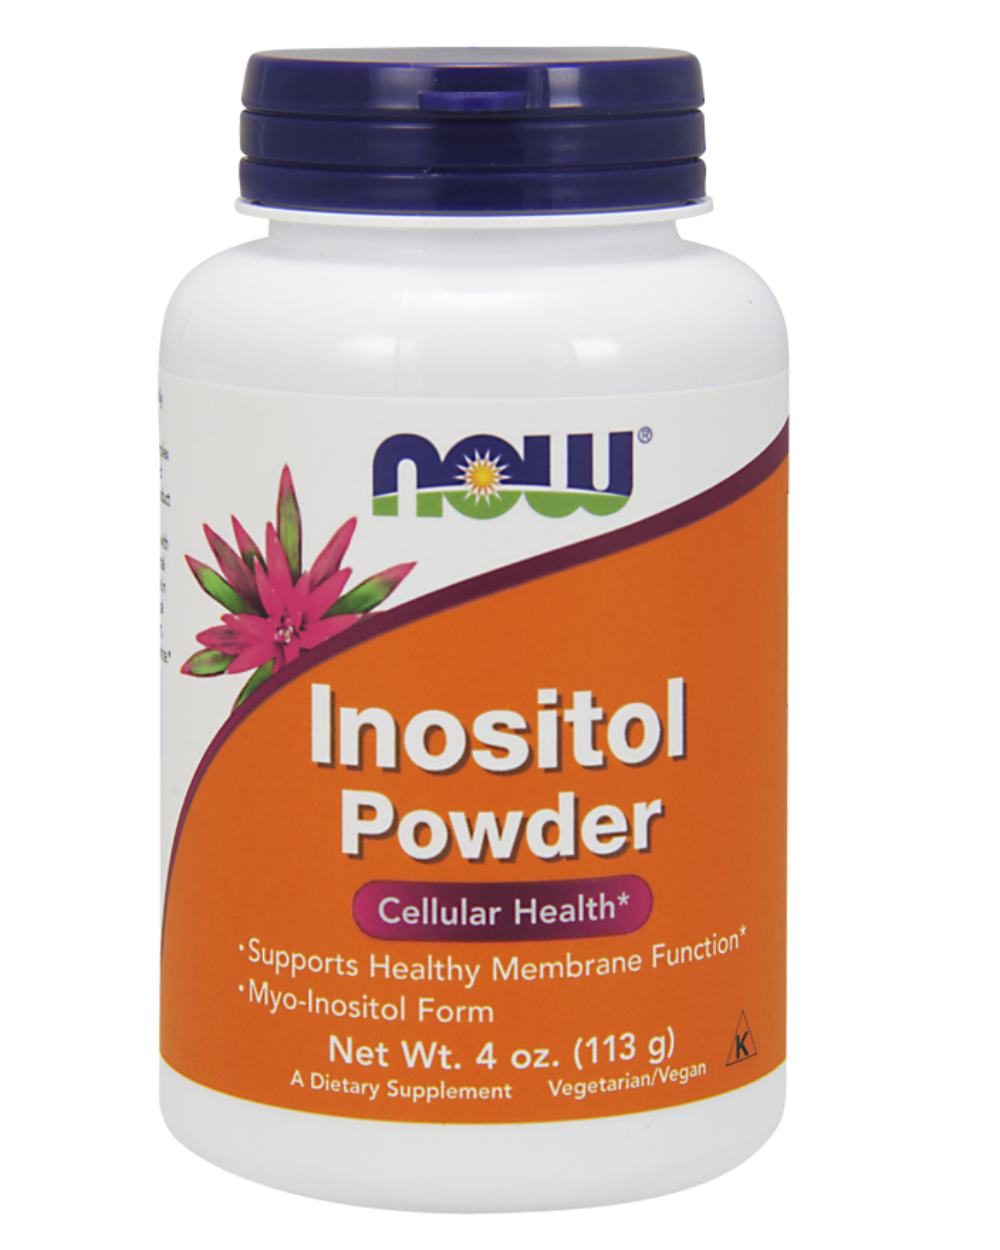 Inositol Powder pure